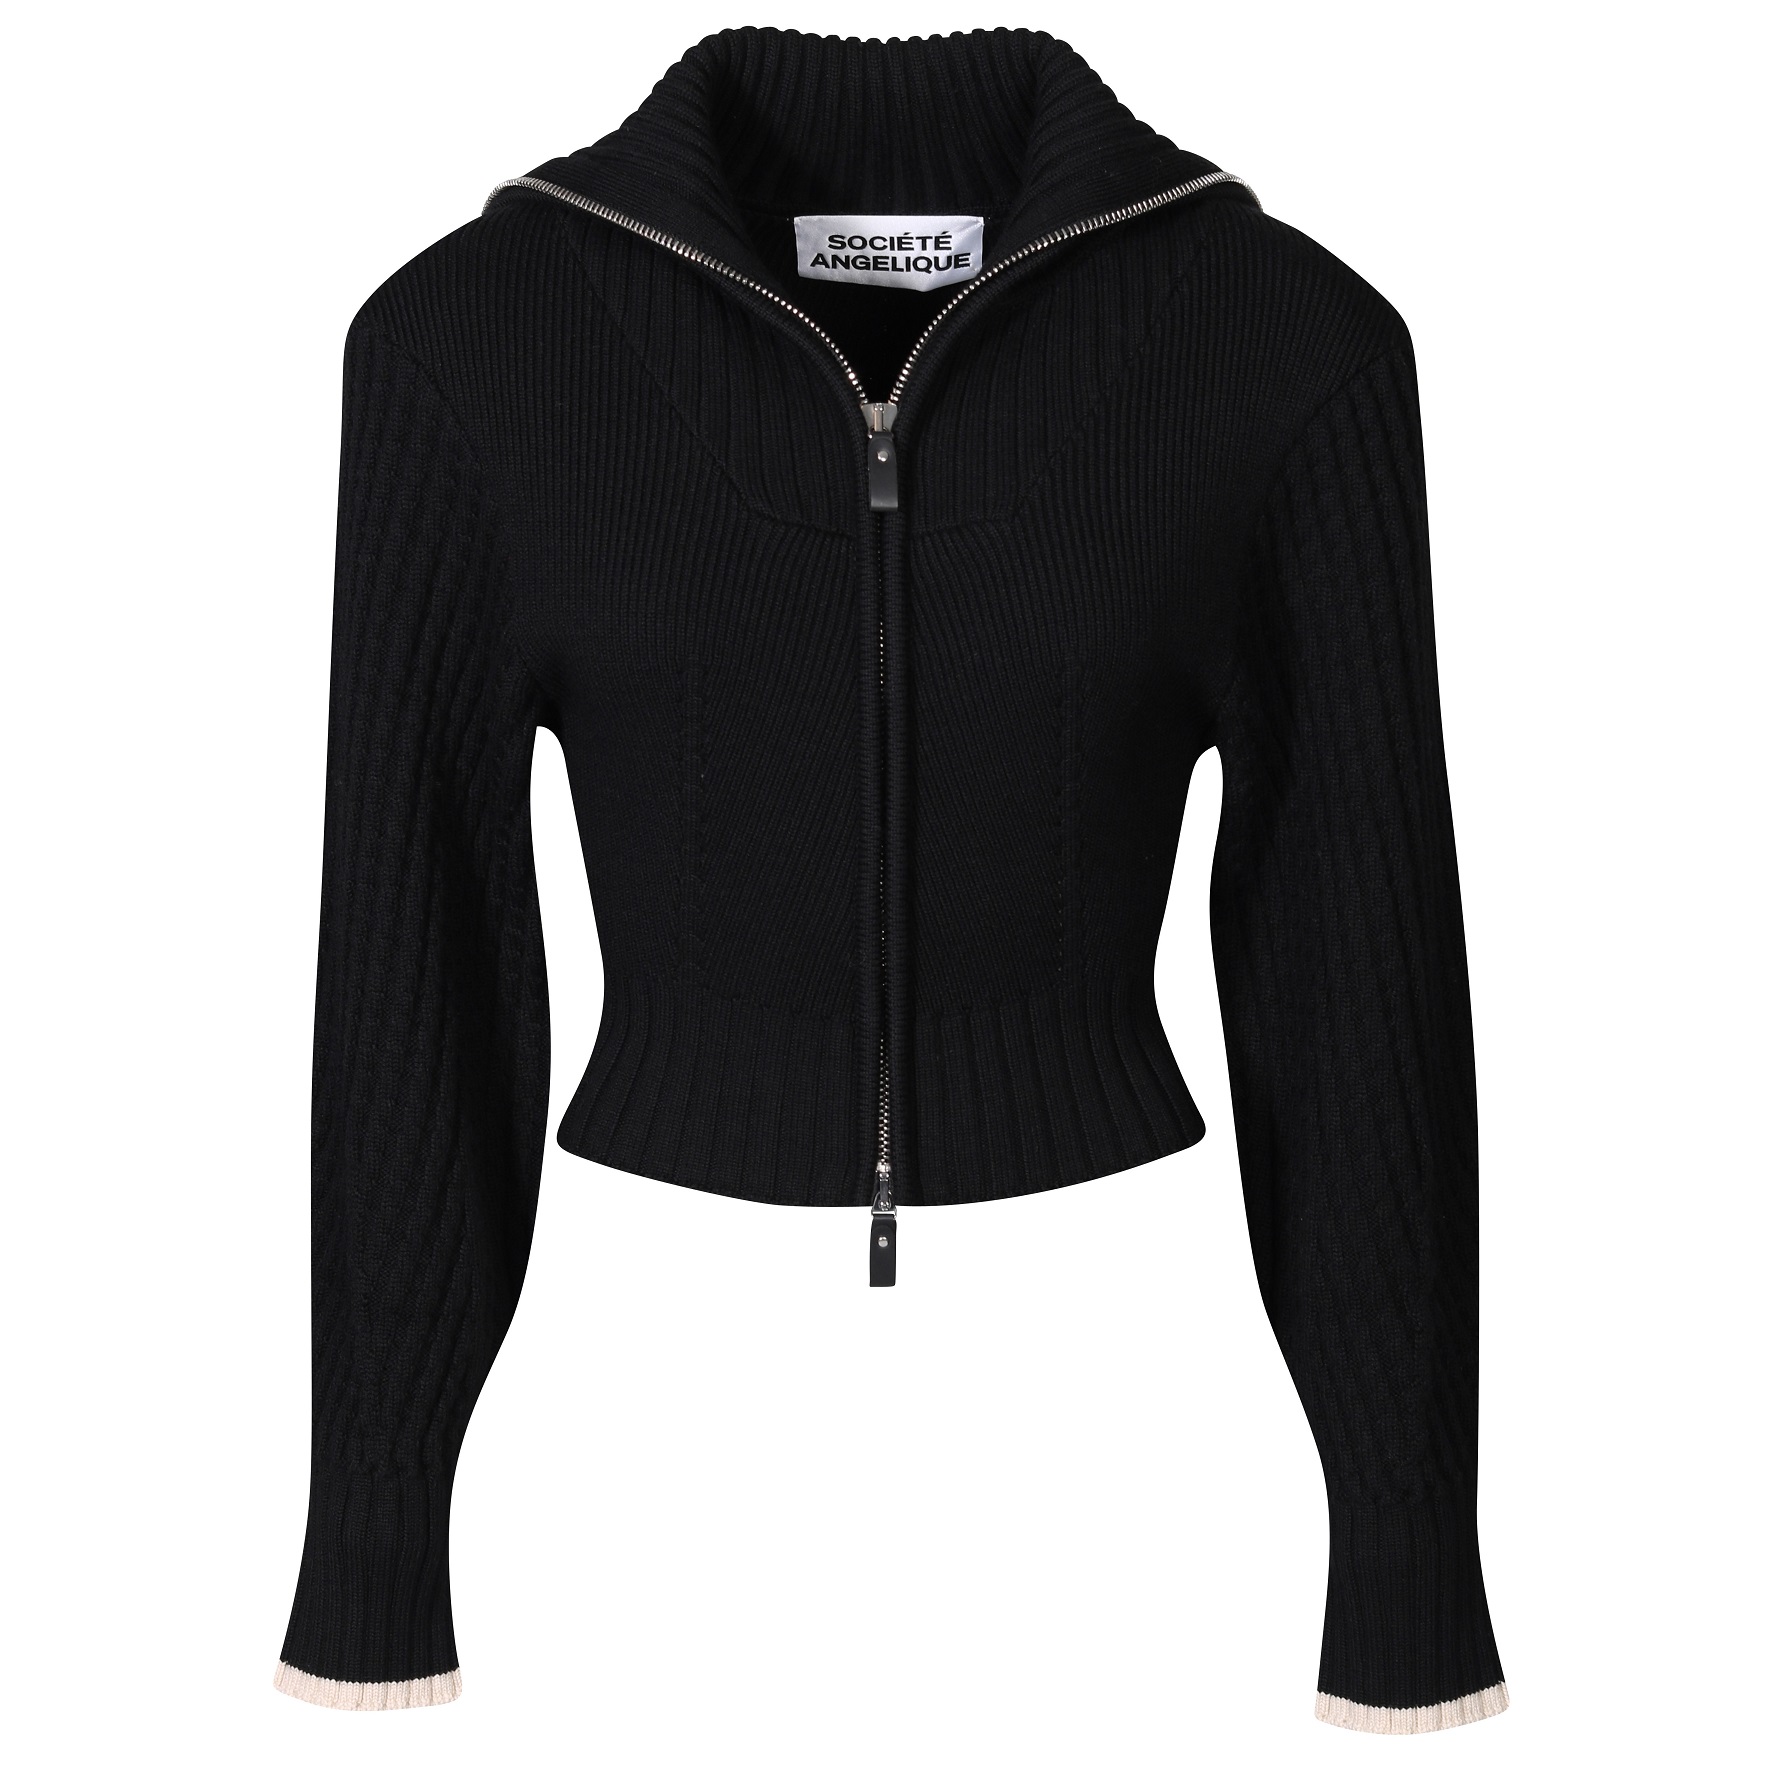 SOCIÉTÉ ANGELIQUE Merino Knit Zip Jacket with Big Shoulder